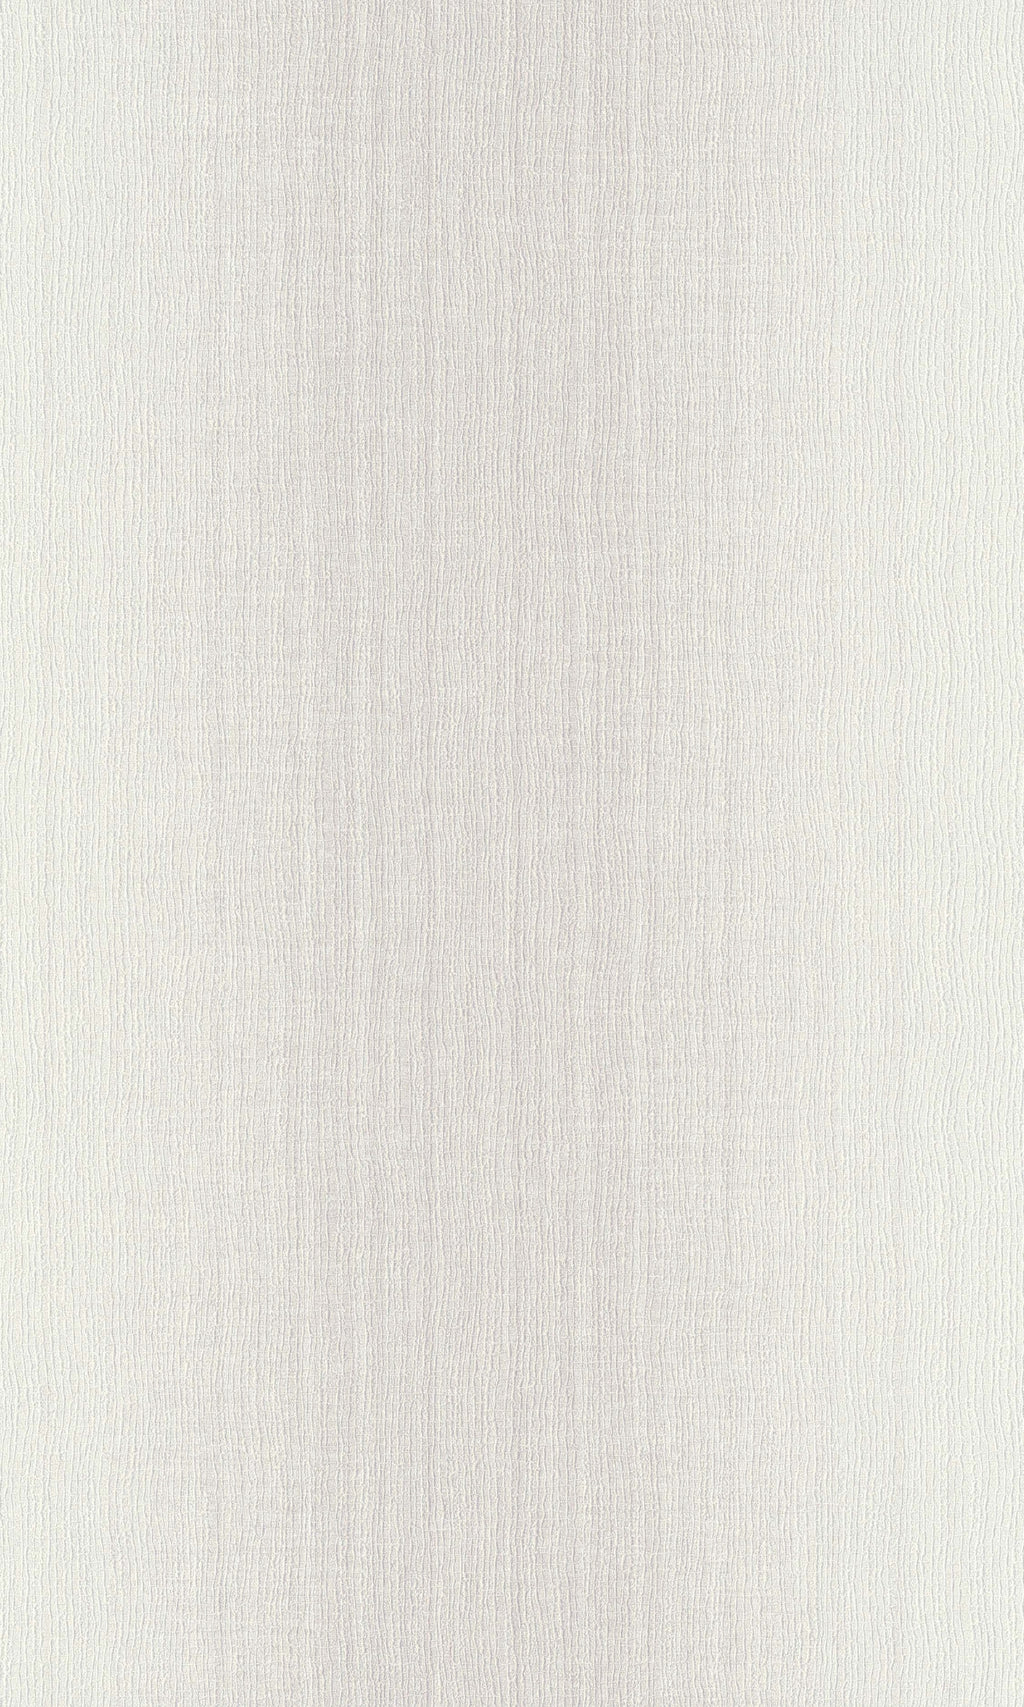 White Plain Textured Wallpaper R8697